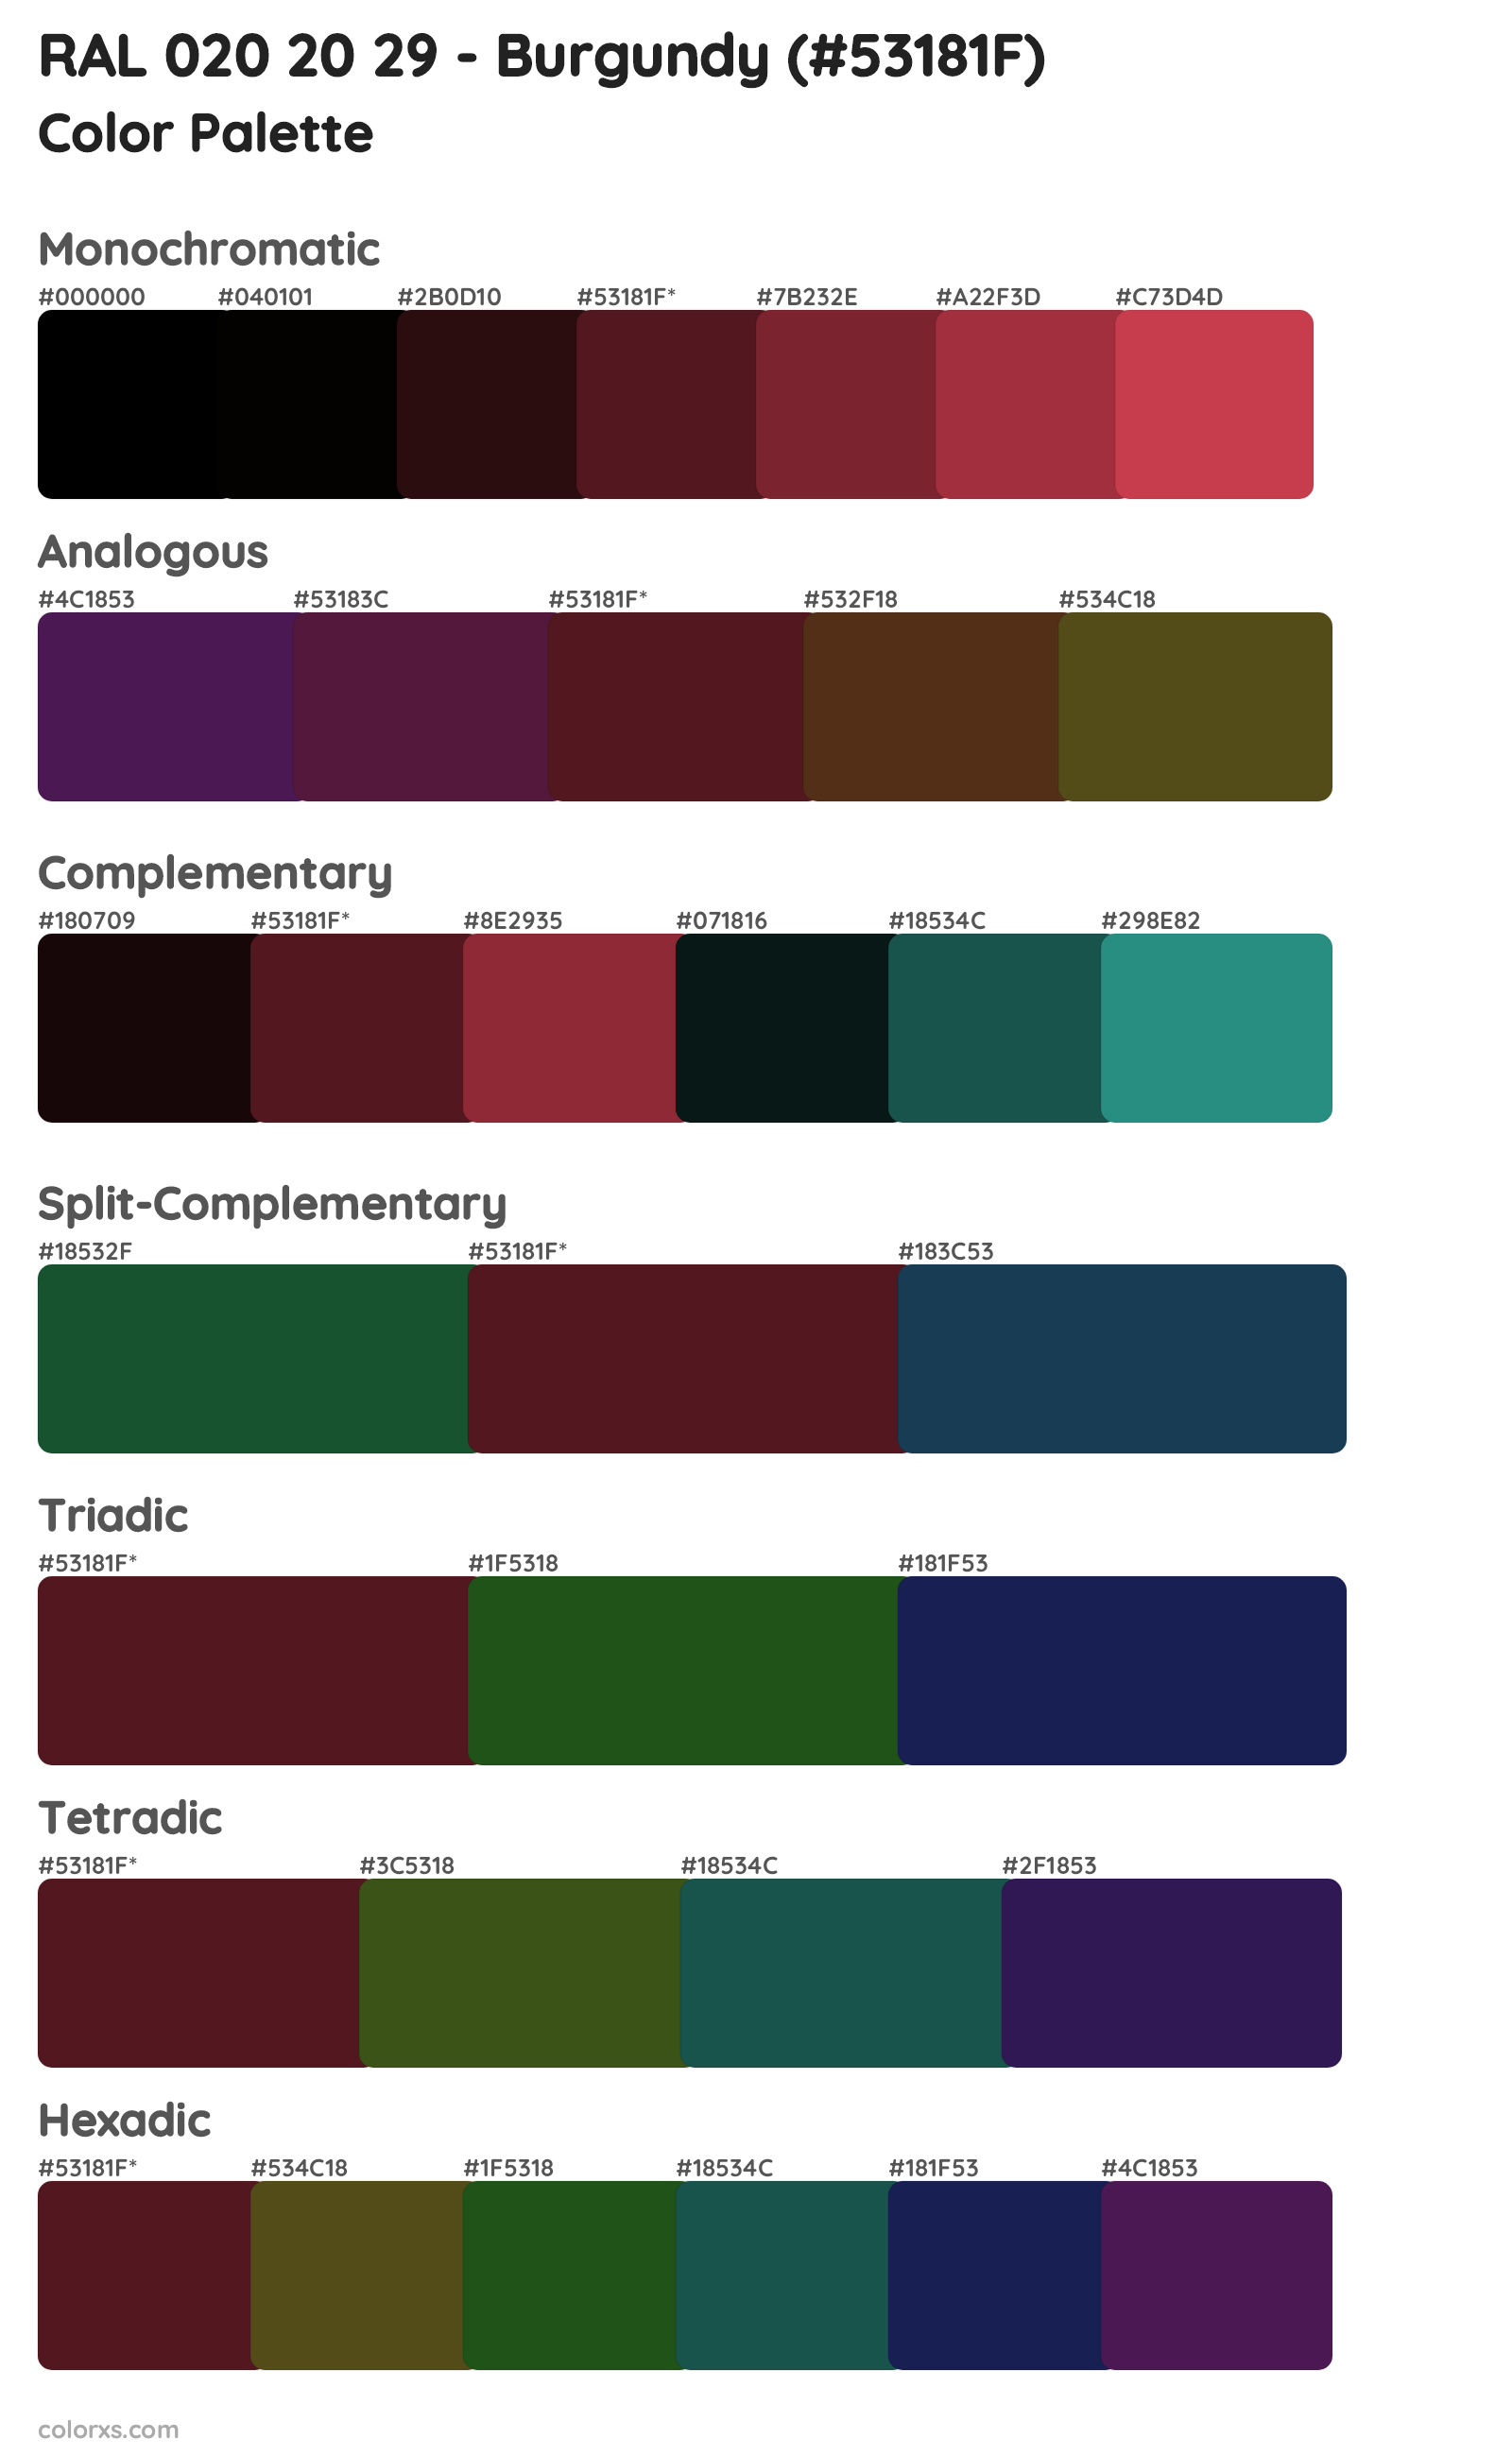 RAL 020 20 29 - Burgundy Color Scheme Palettes